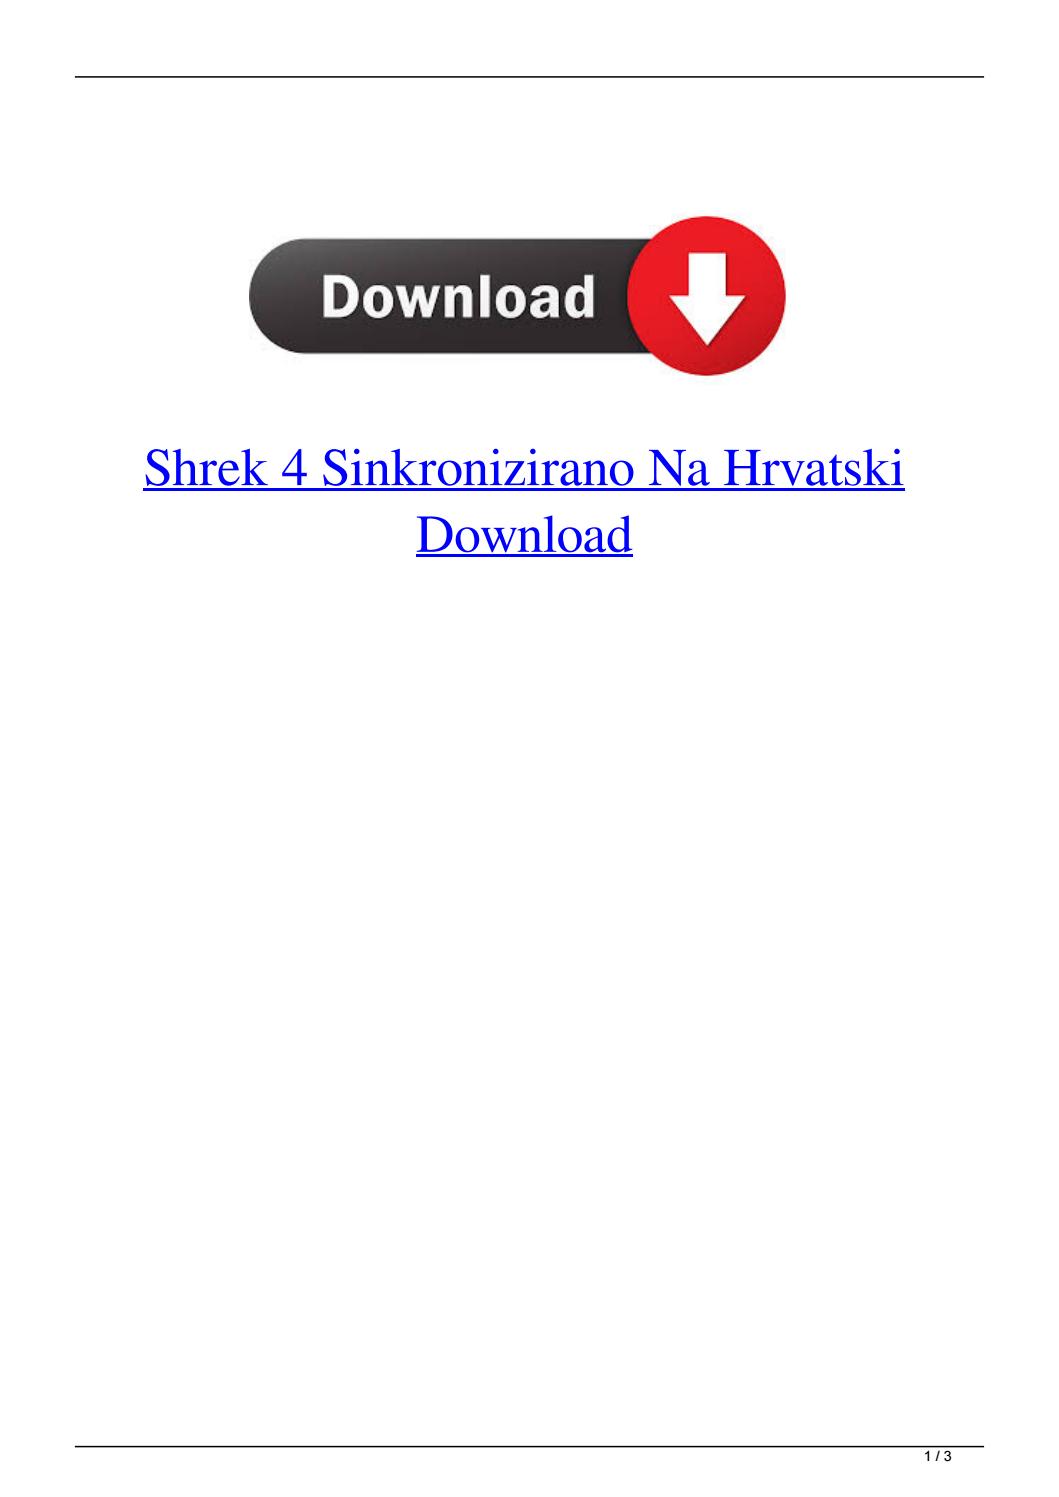 pokemon sinkronizirani na hrvatski download